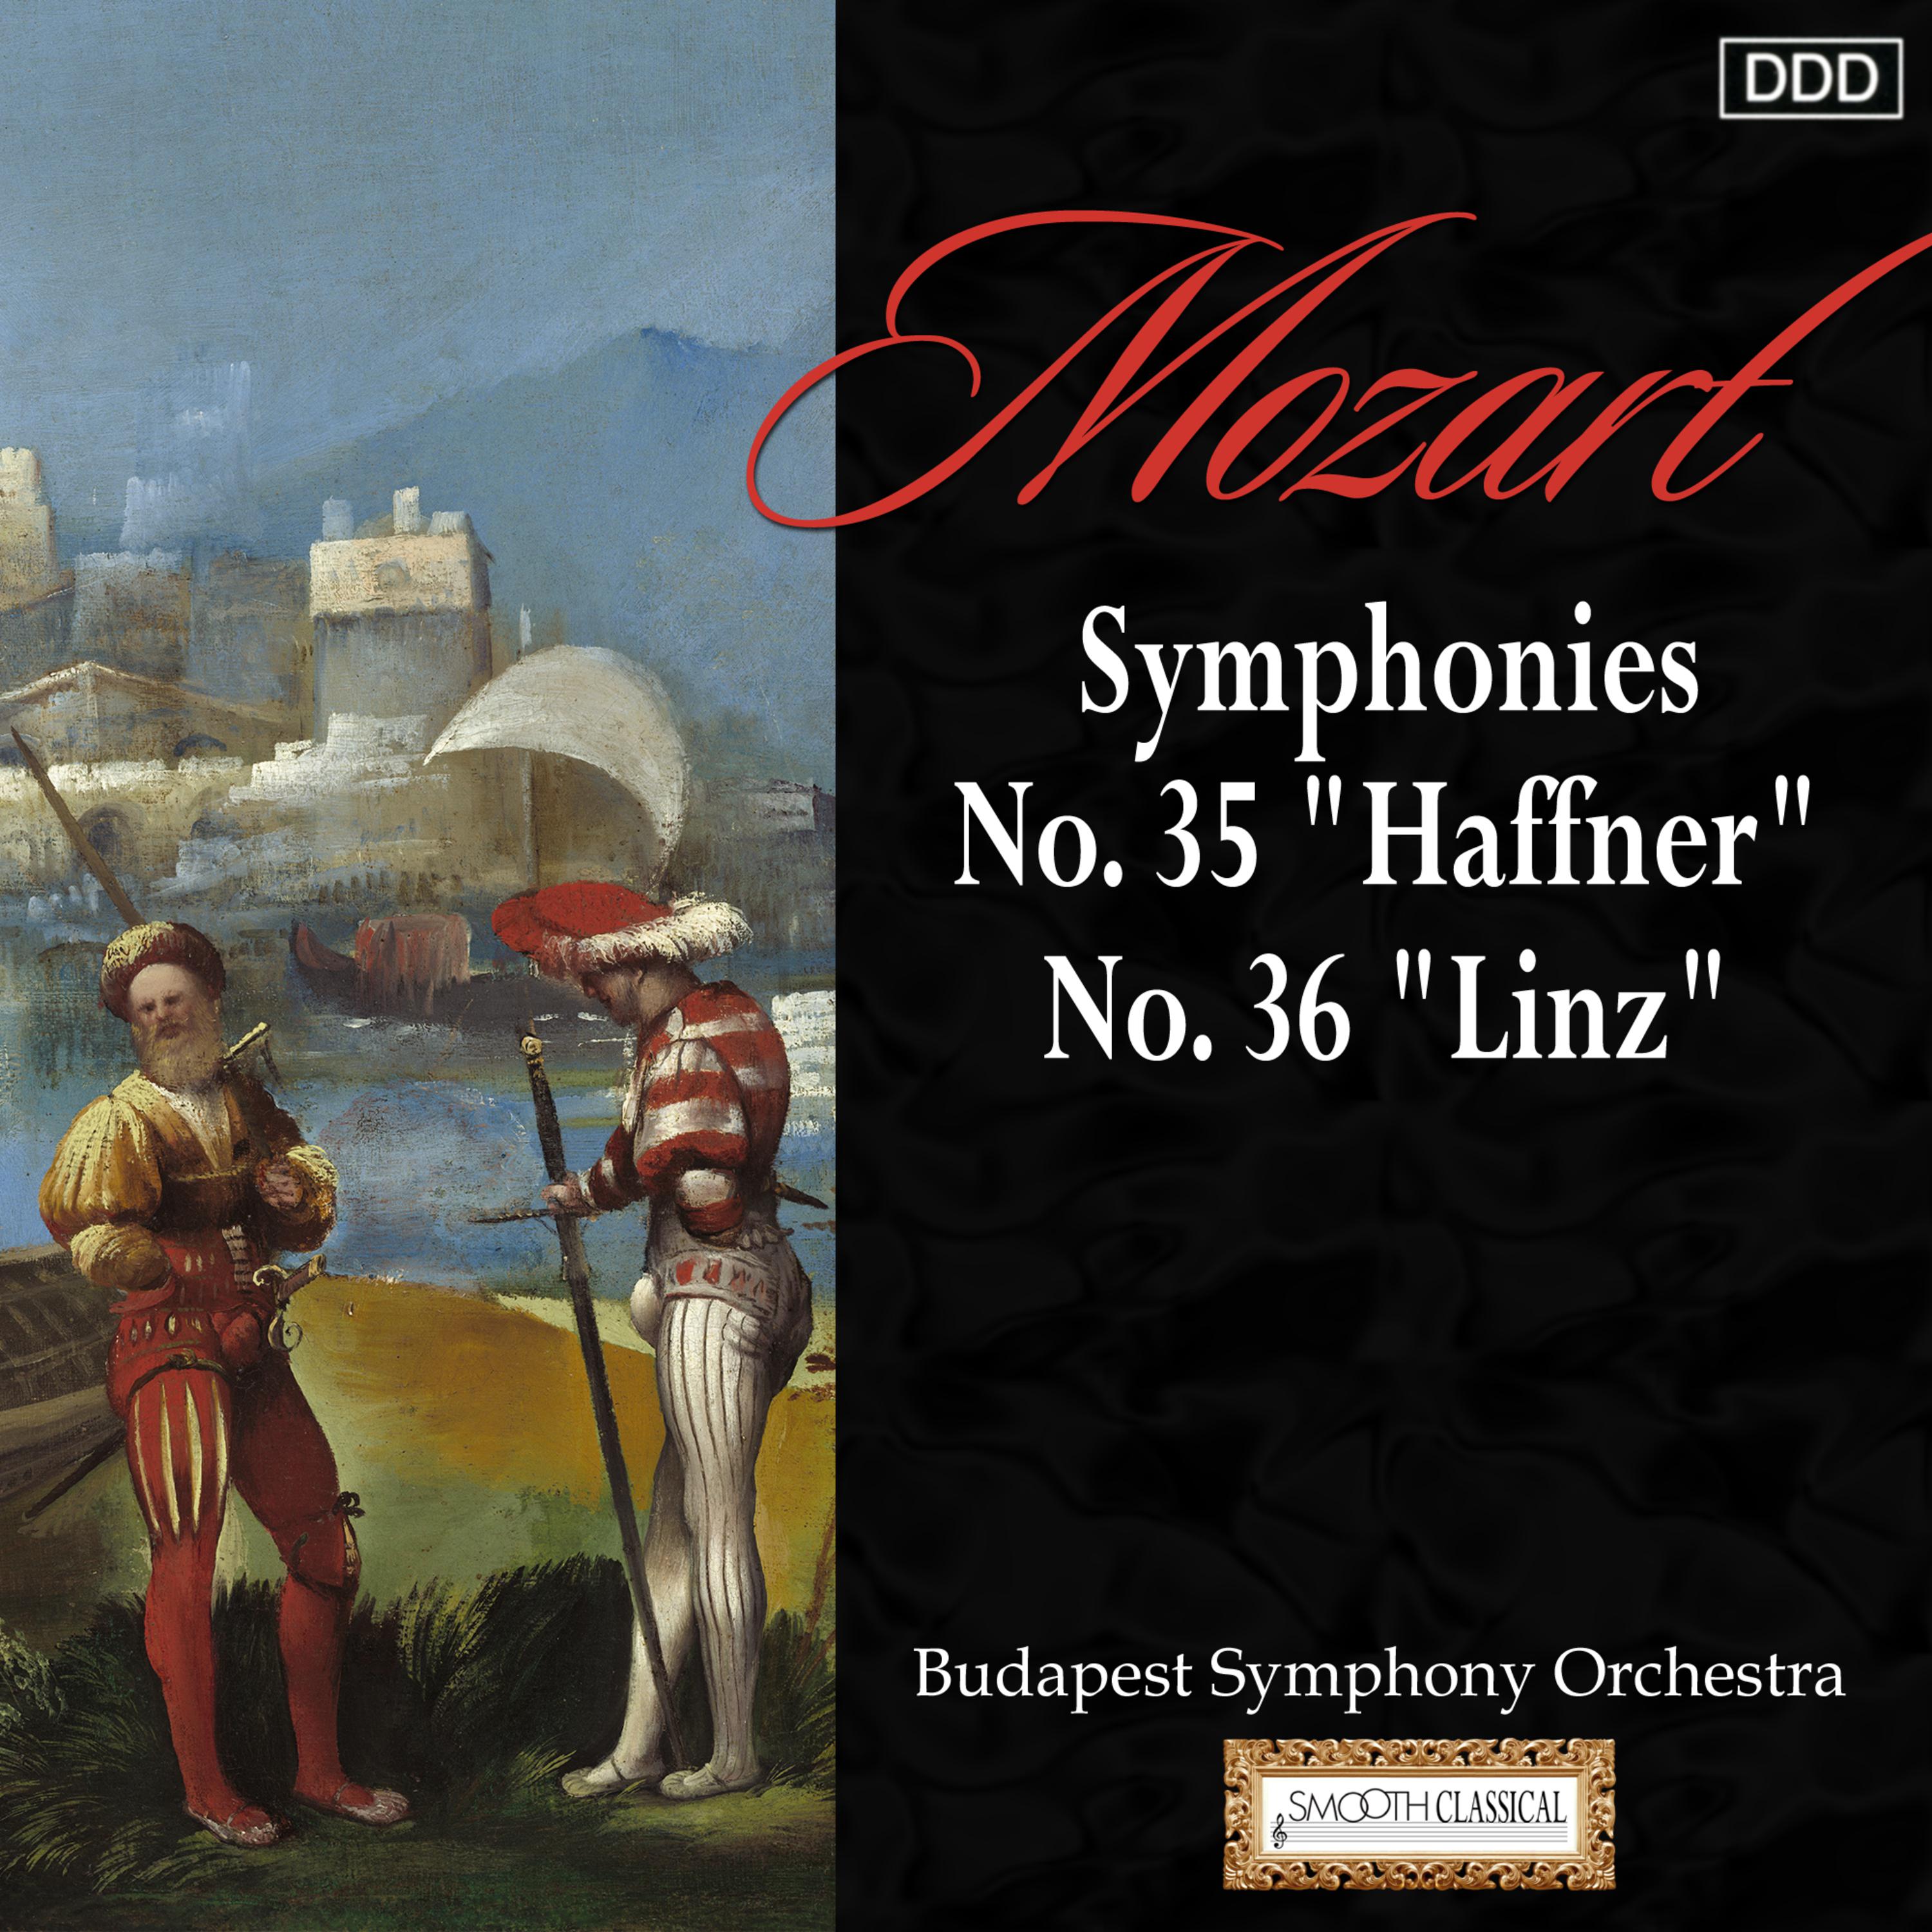 Symphony No. 36 in C Major, K. 425 "Linz": I. Adagio - Allegro spiritoso